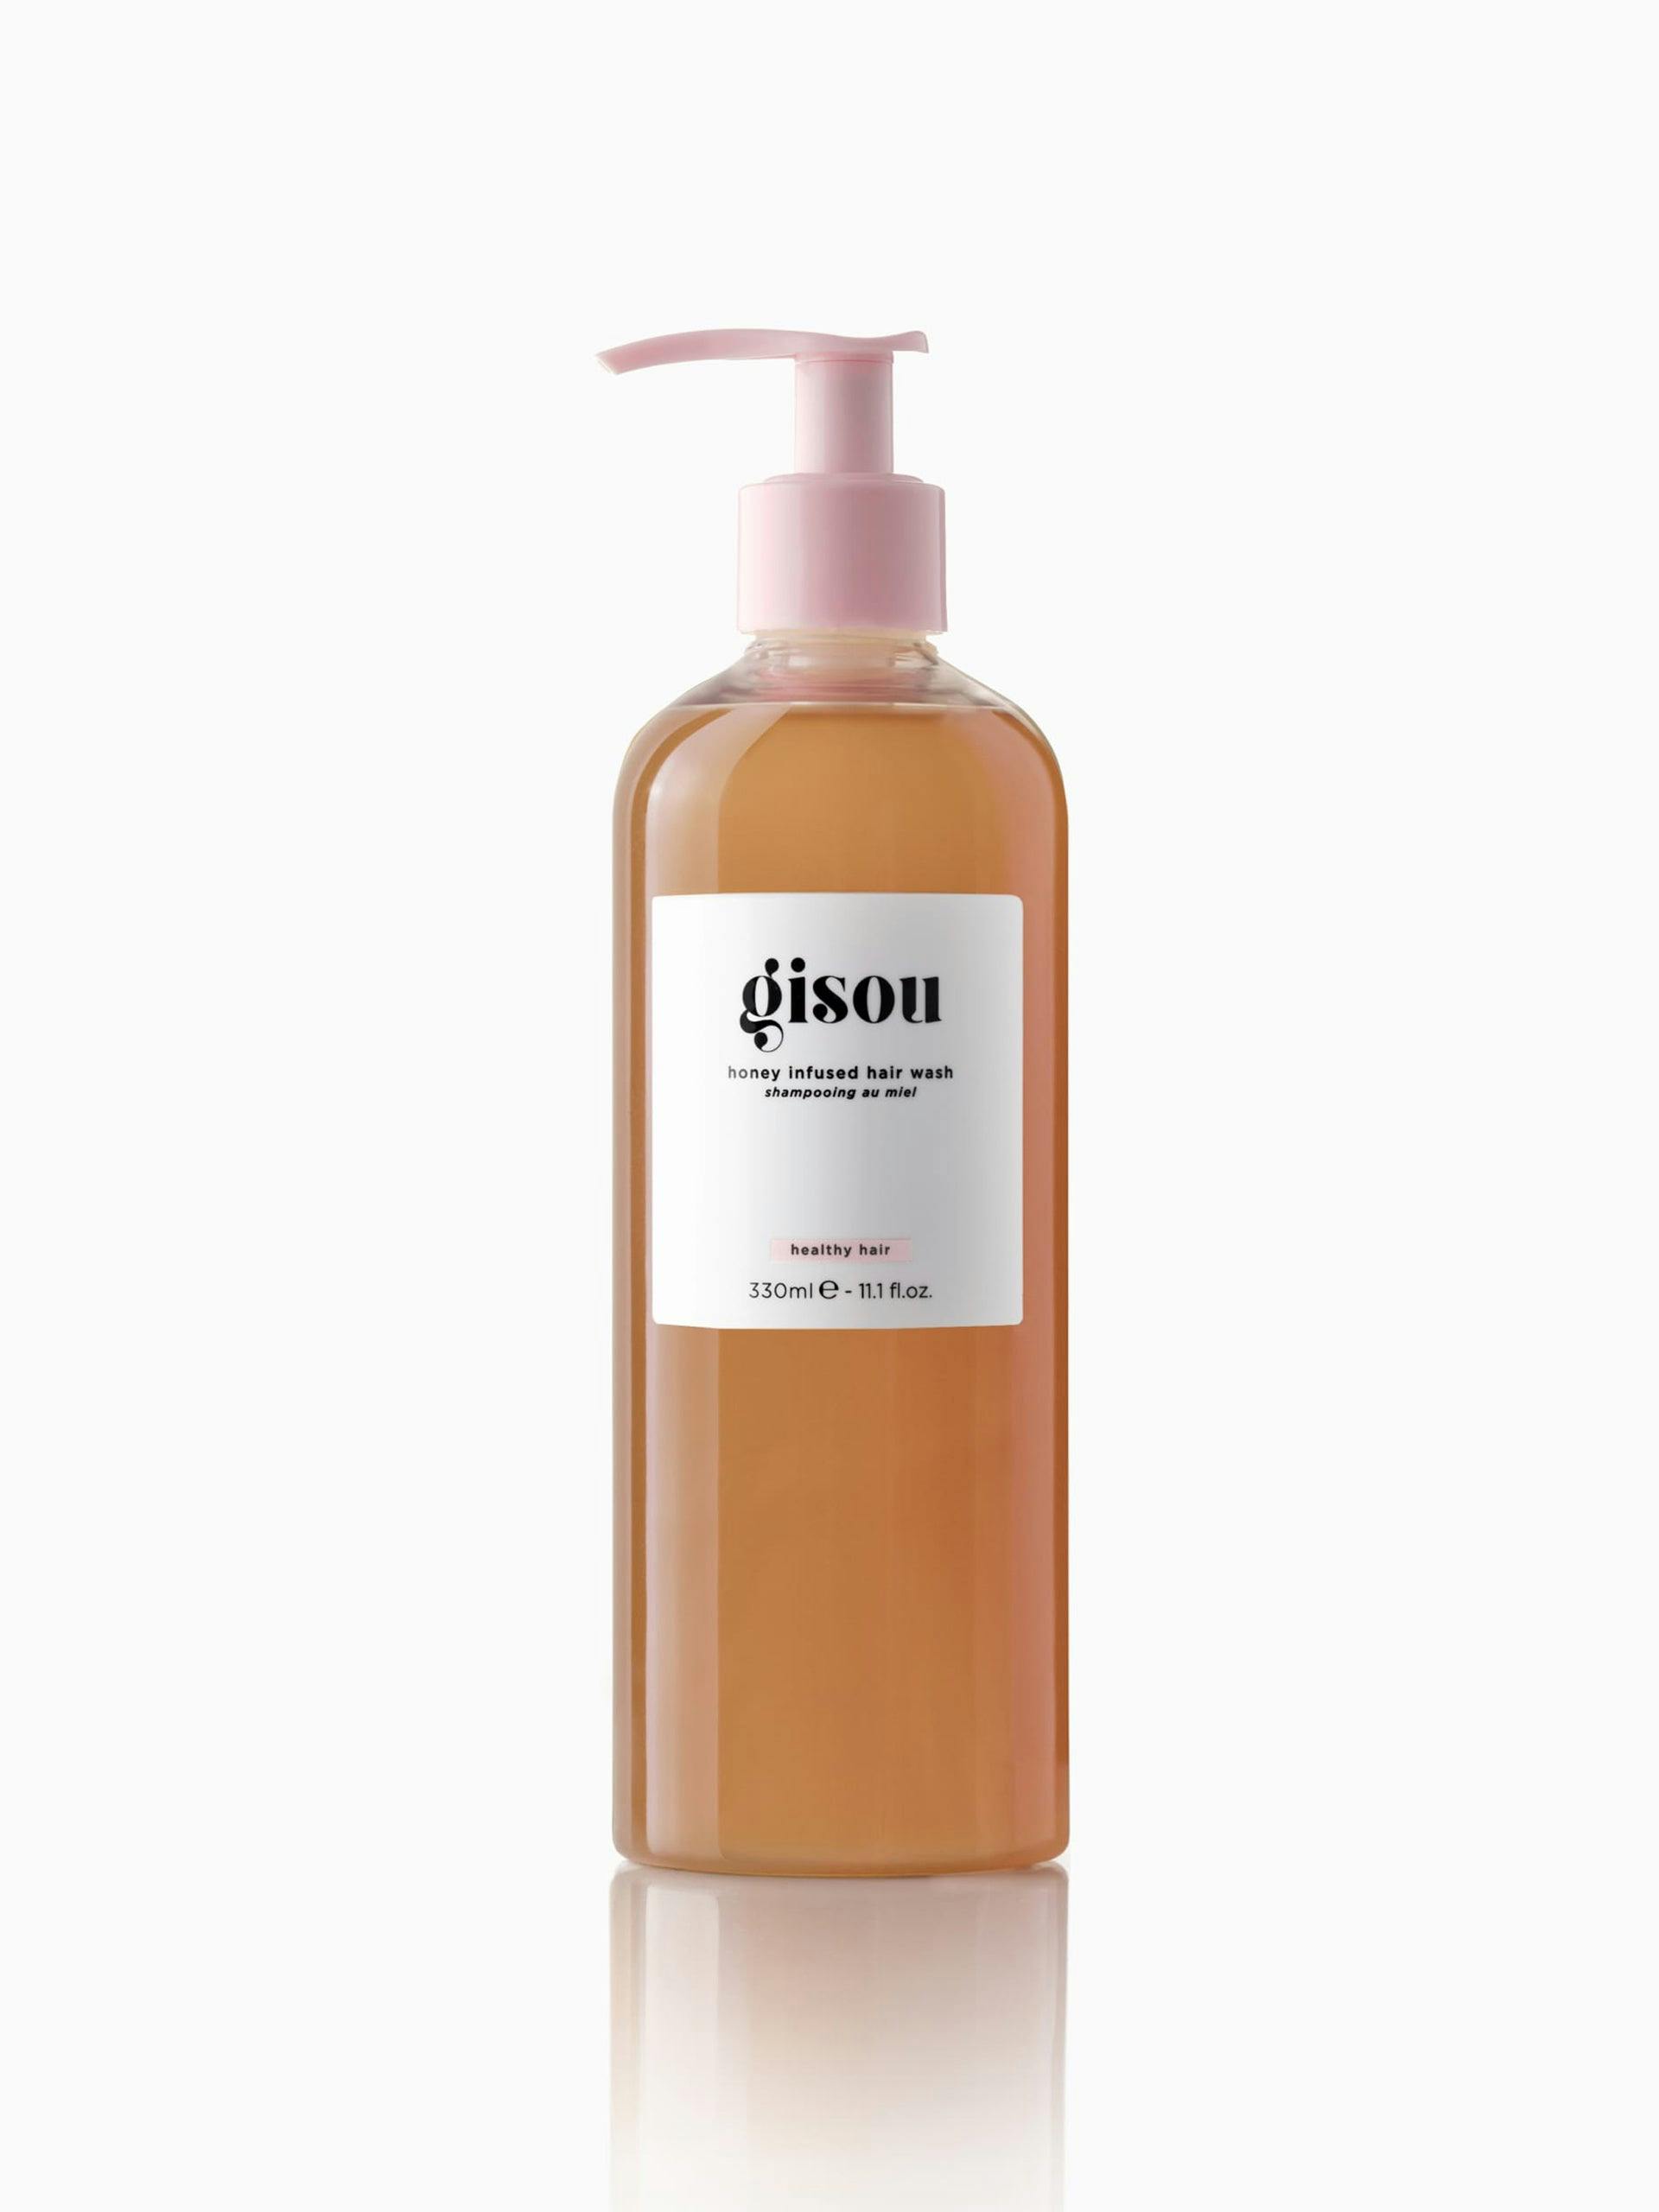 Honey infused shampoo